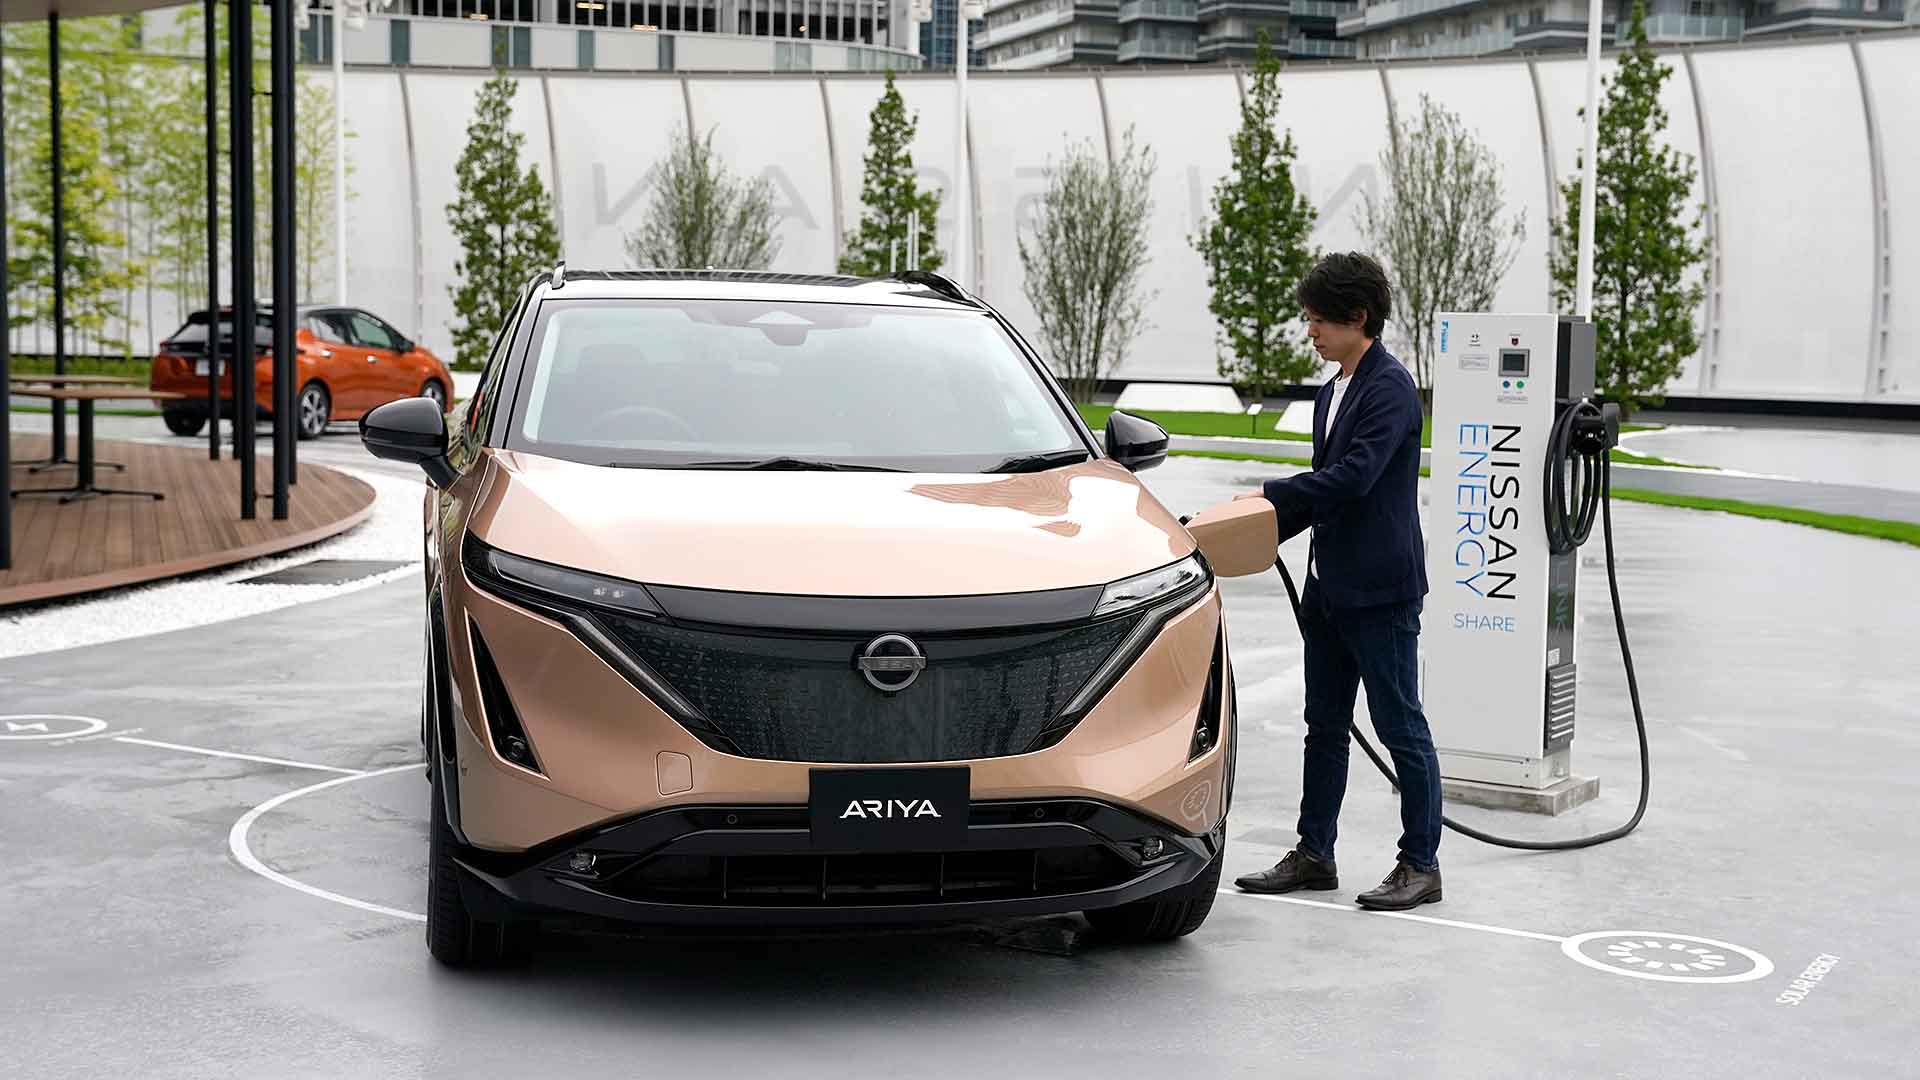 Radical new Nissan Ariya electric SUV revealed